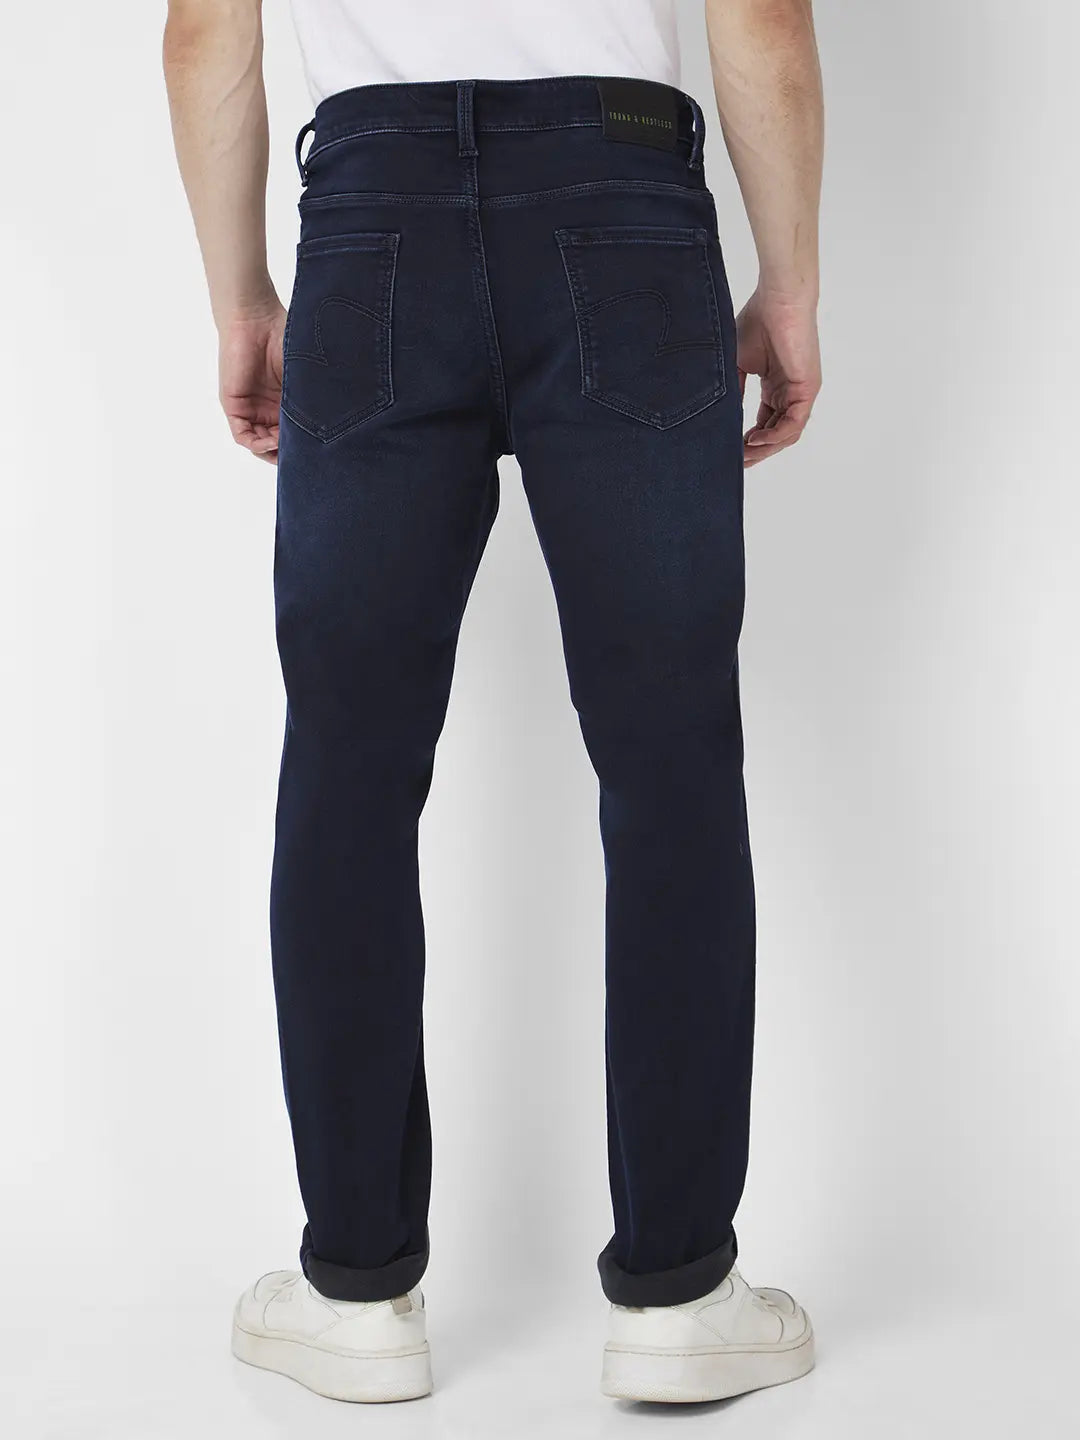 Spykar Men Blue Indigo Cotton Stretch Regular Fit Narrow Length Clean Look Mid Rise Jeans (Rover)